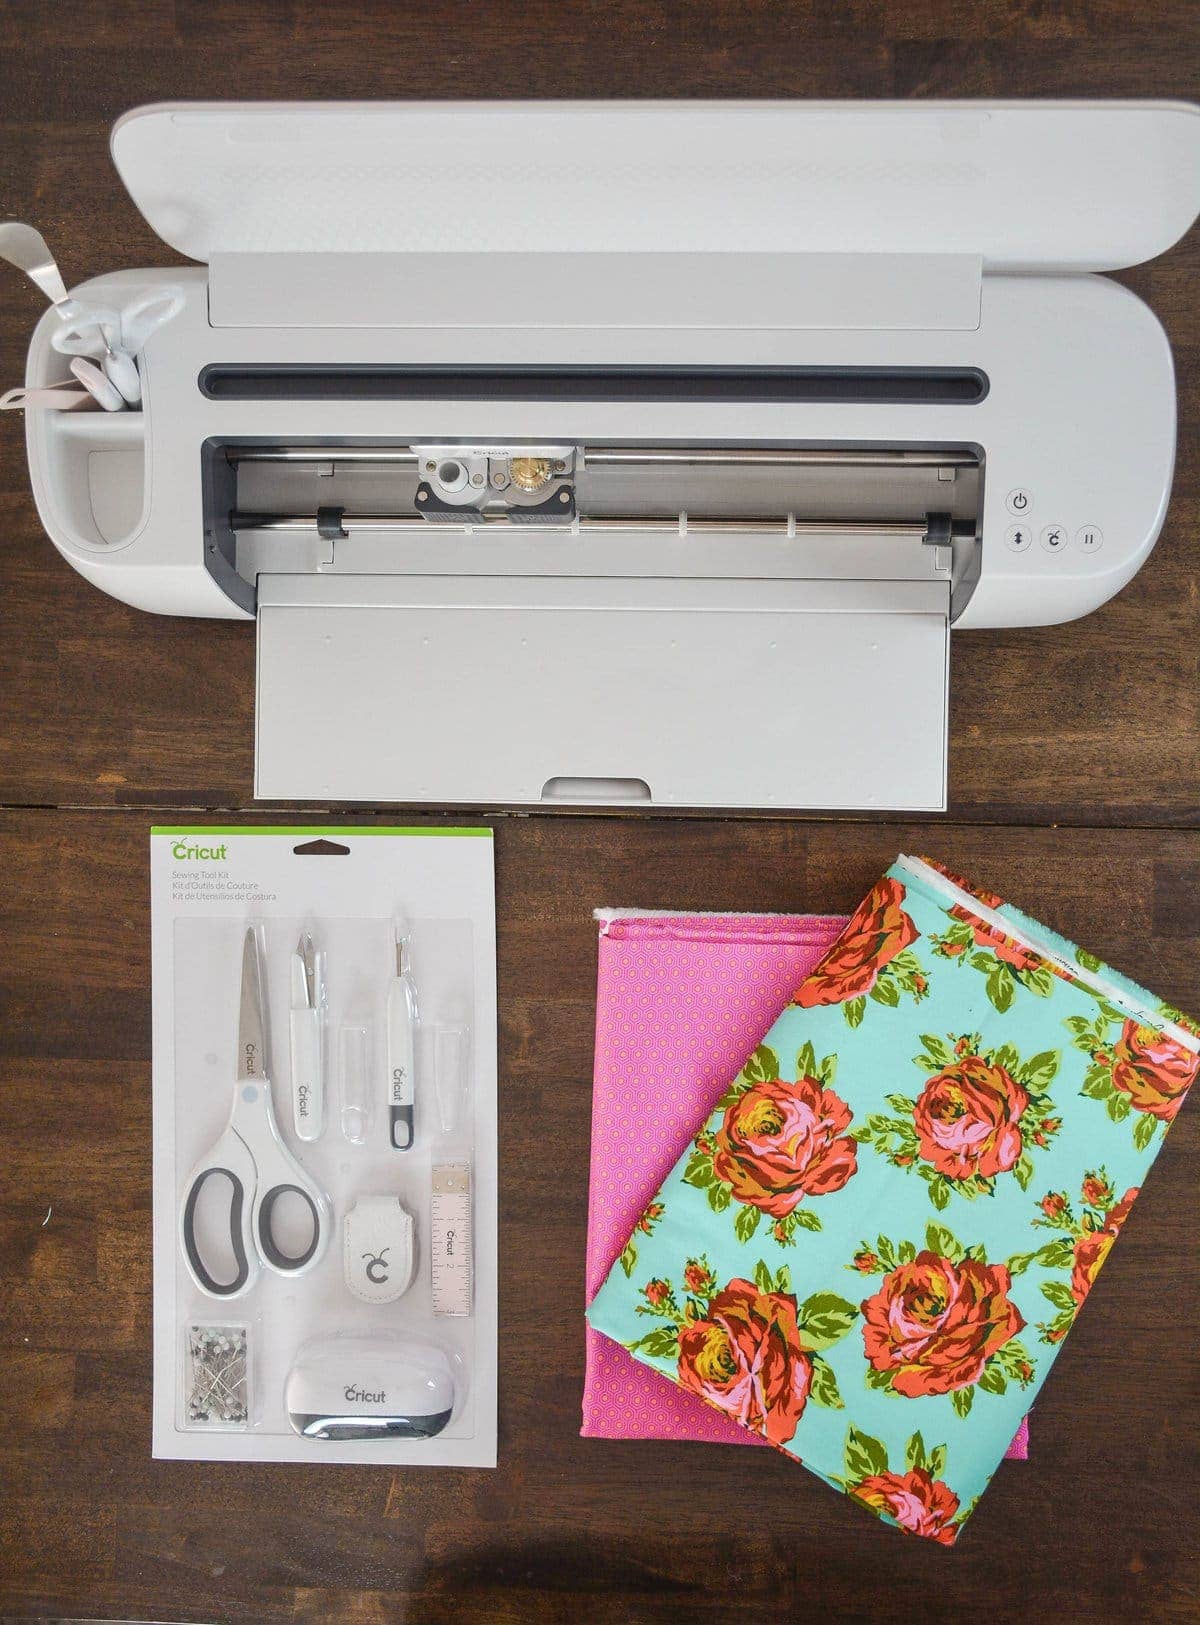 10 Cricut Products That Make Sewing a Breeze - Cricut Sewing Tools